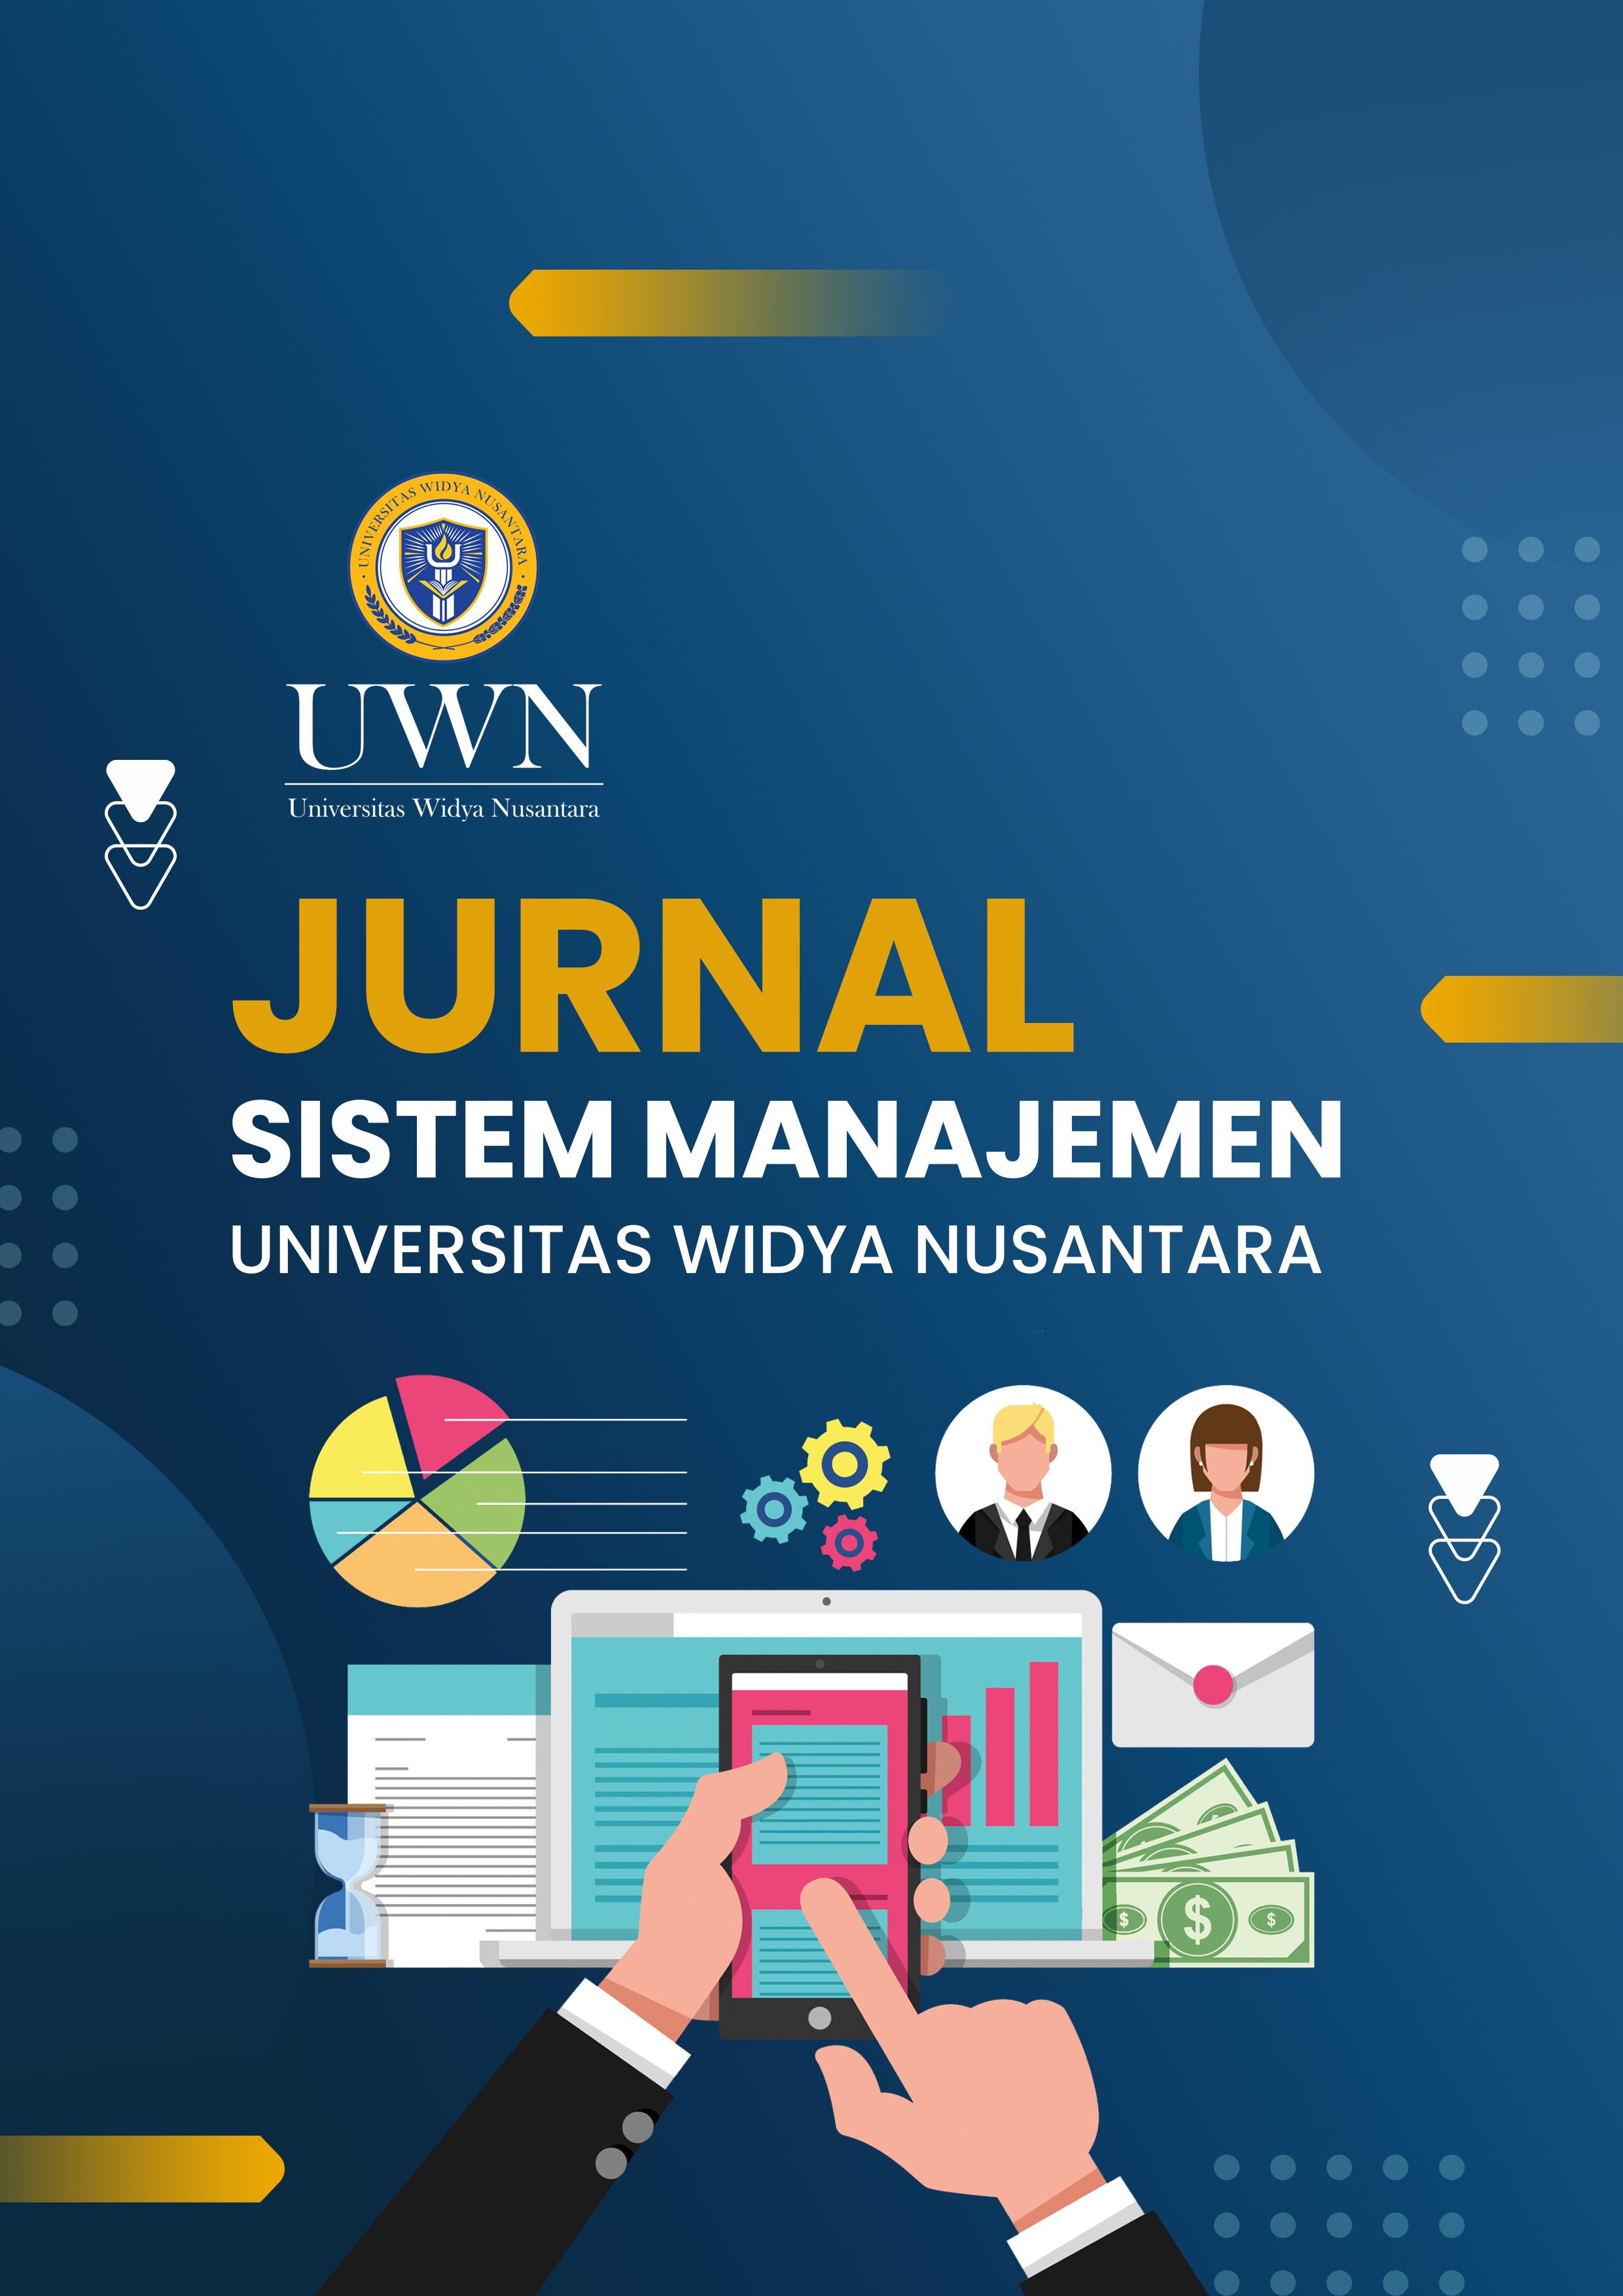 UWN: Jurnal Sistem Manajemen